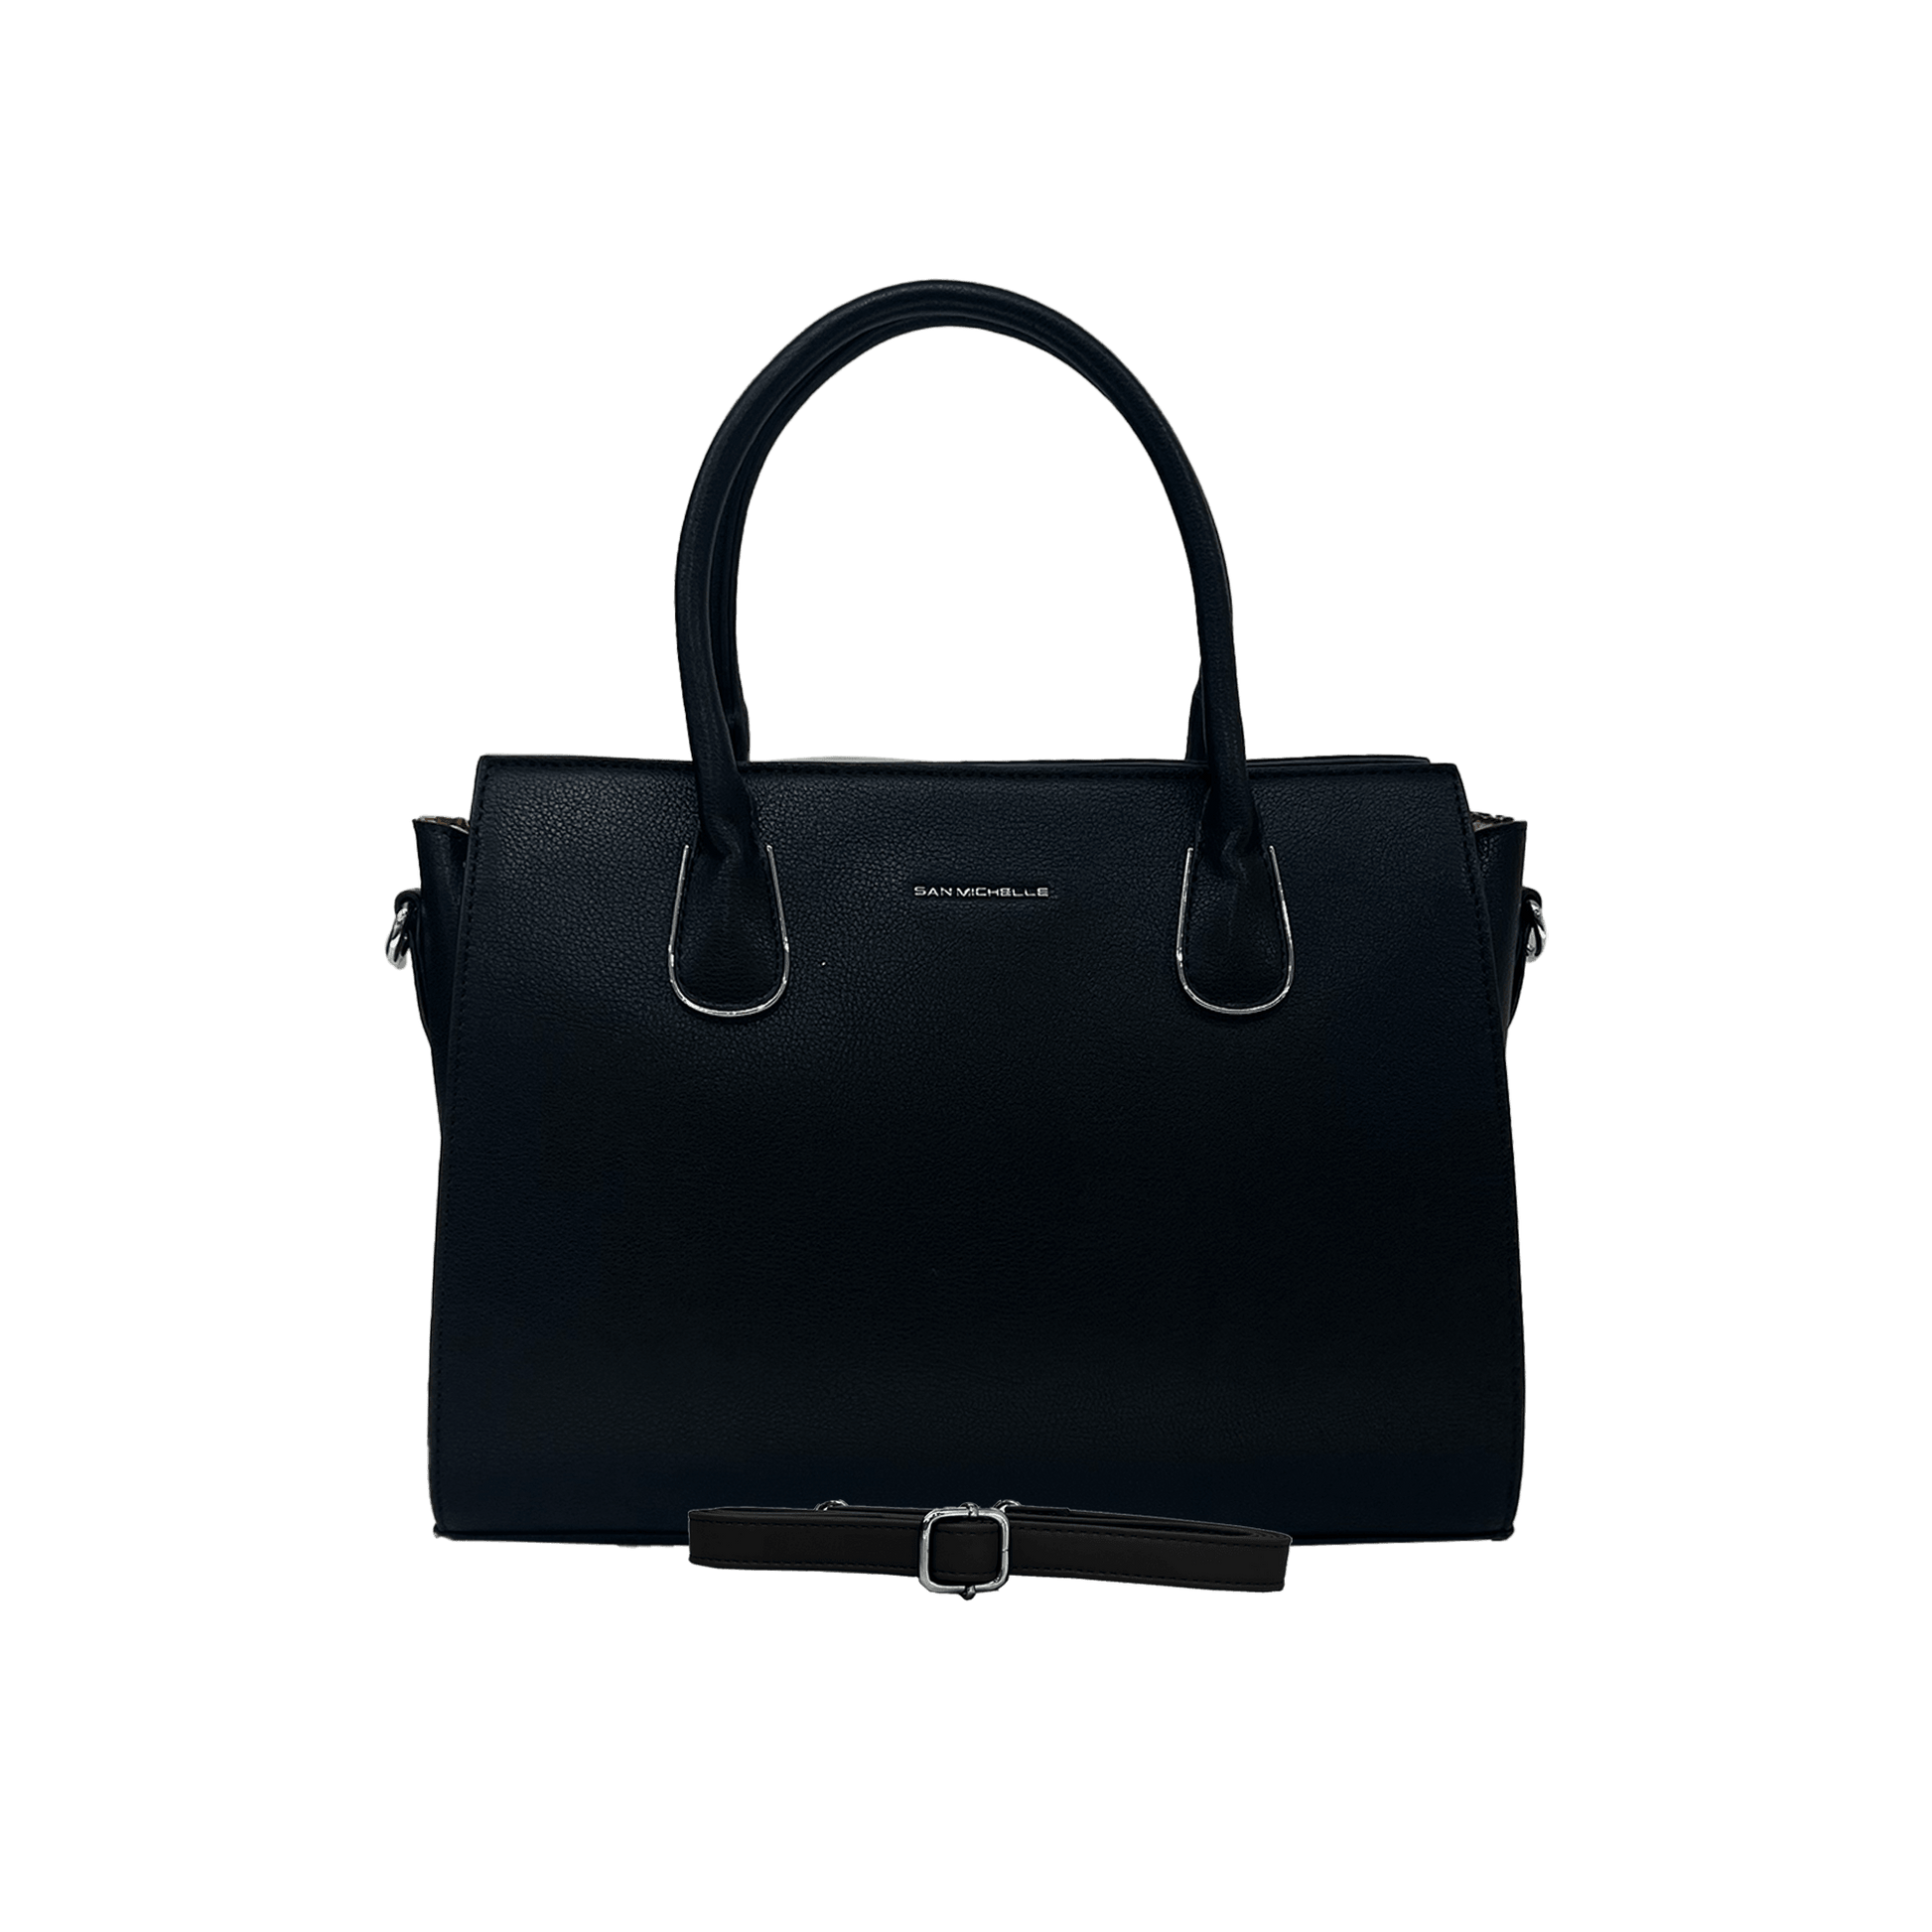 Maria Carryall Bag - San Michelle Bags suitcase nz